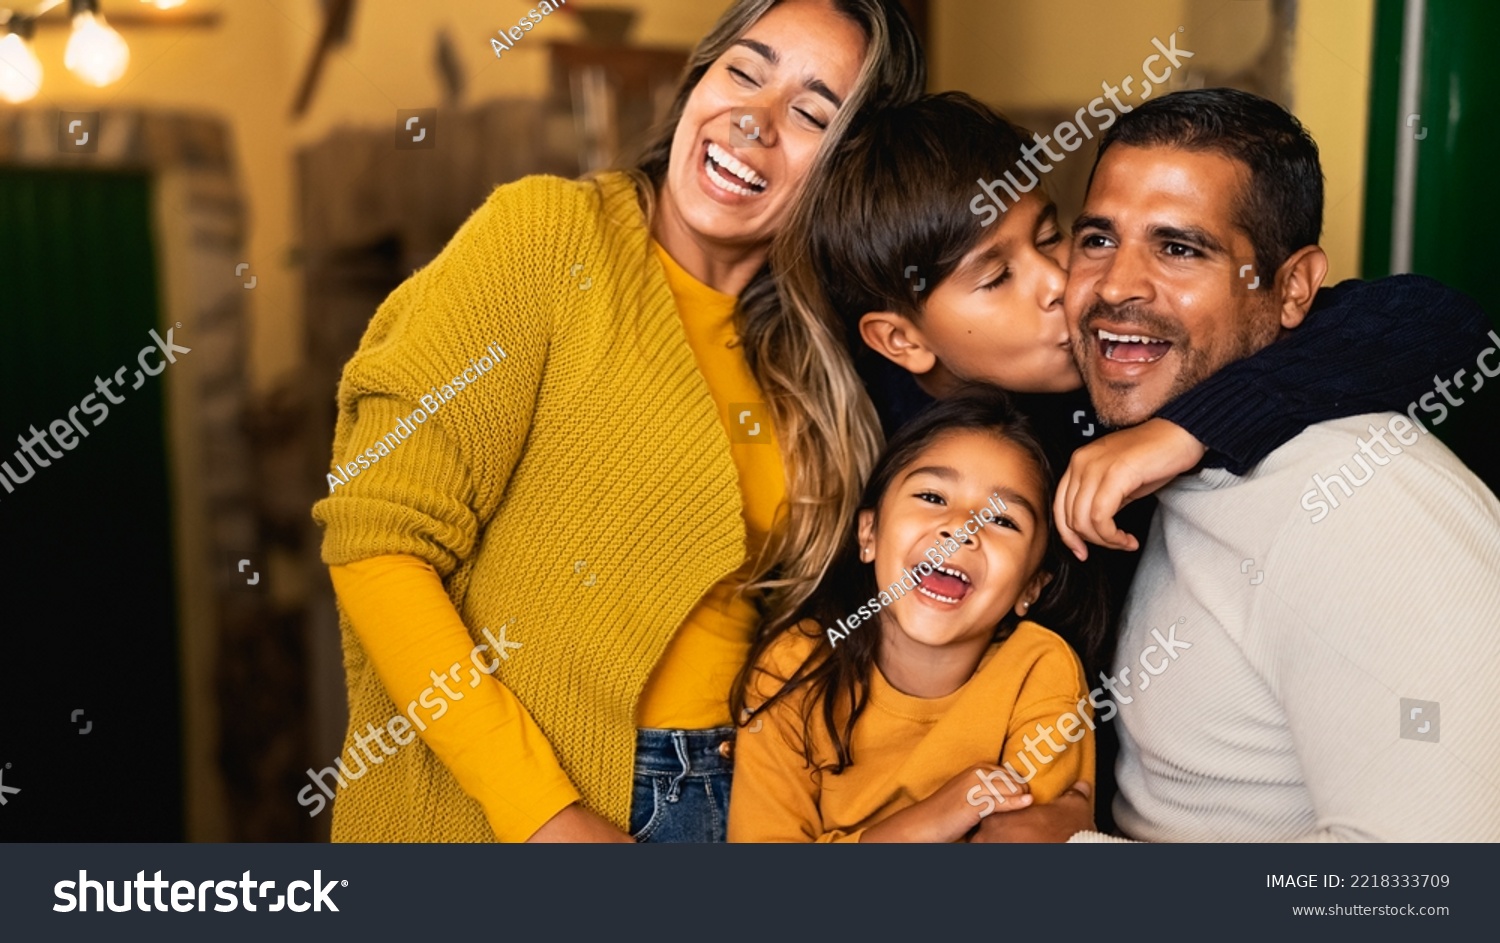 Happy Hispanic family having fun together #2218333709